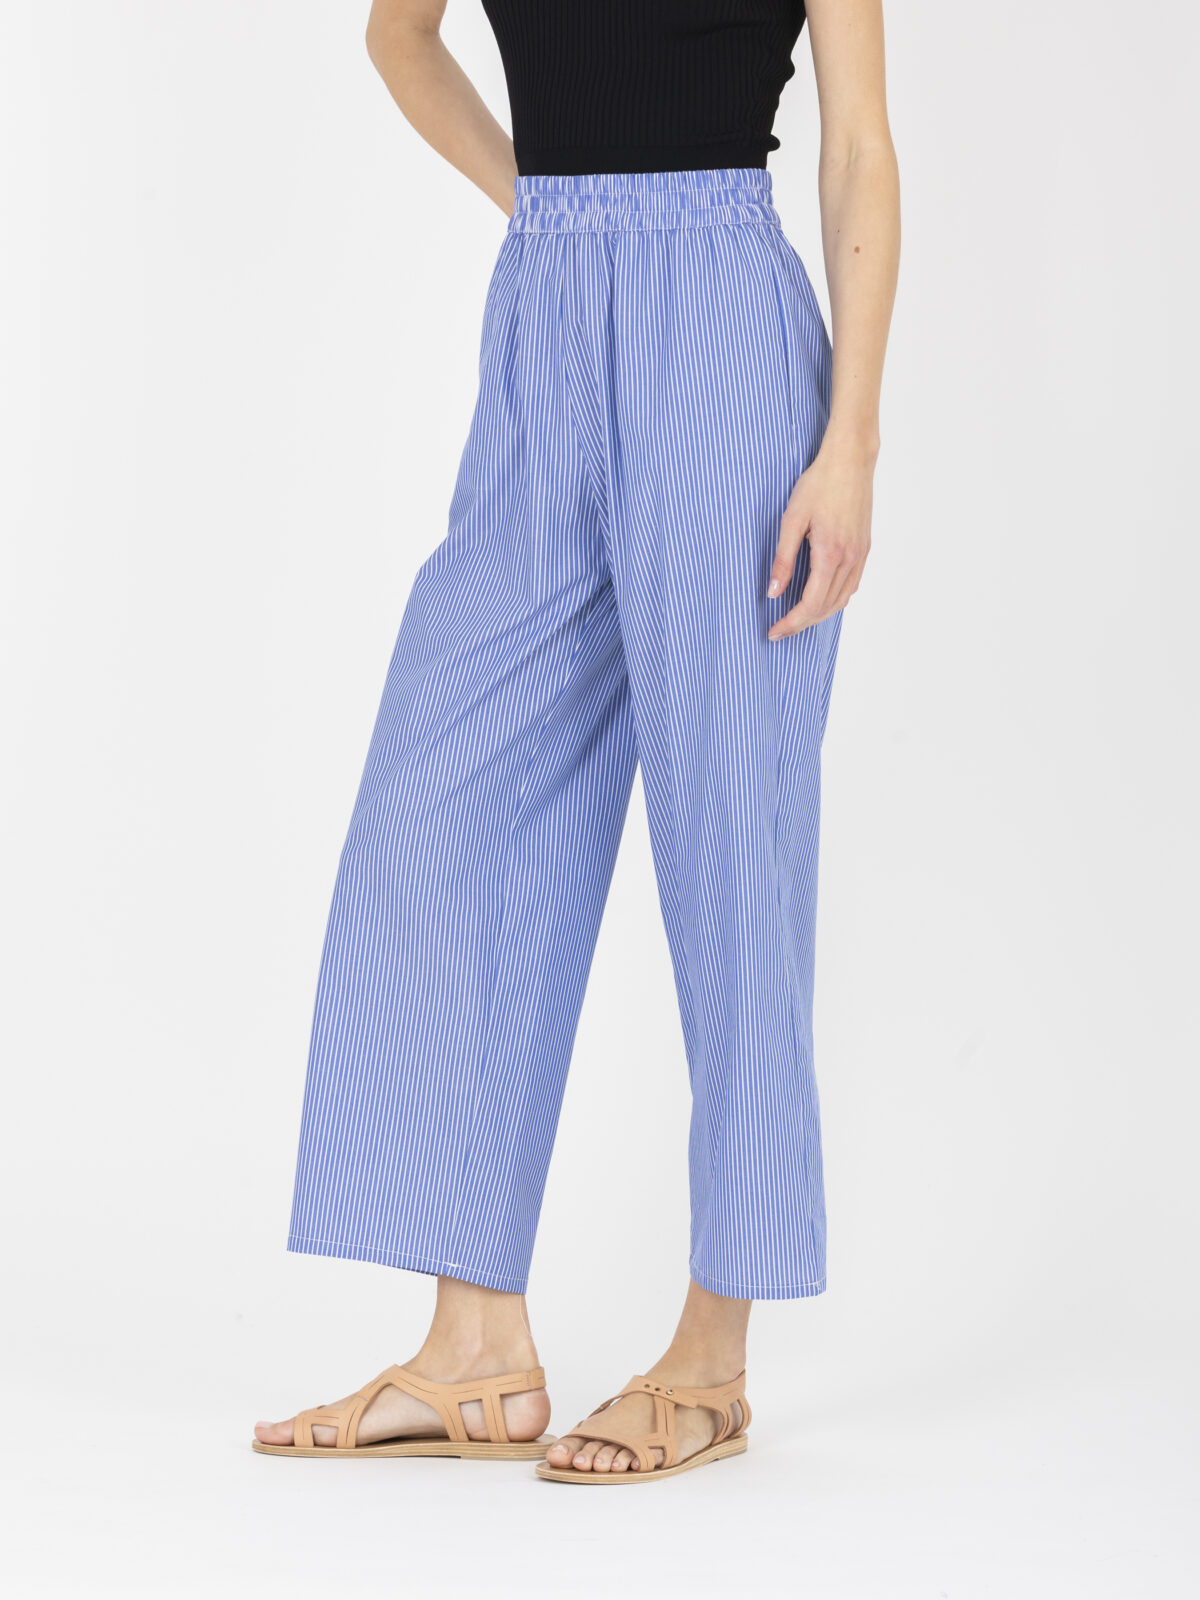 mika-cotton-pants-striped-blue-pyjama-elastic-uniformeathens-matchboxathens